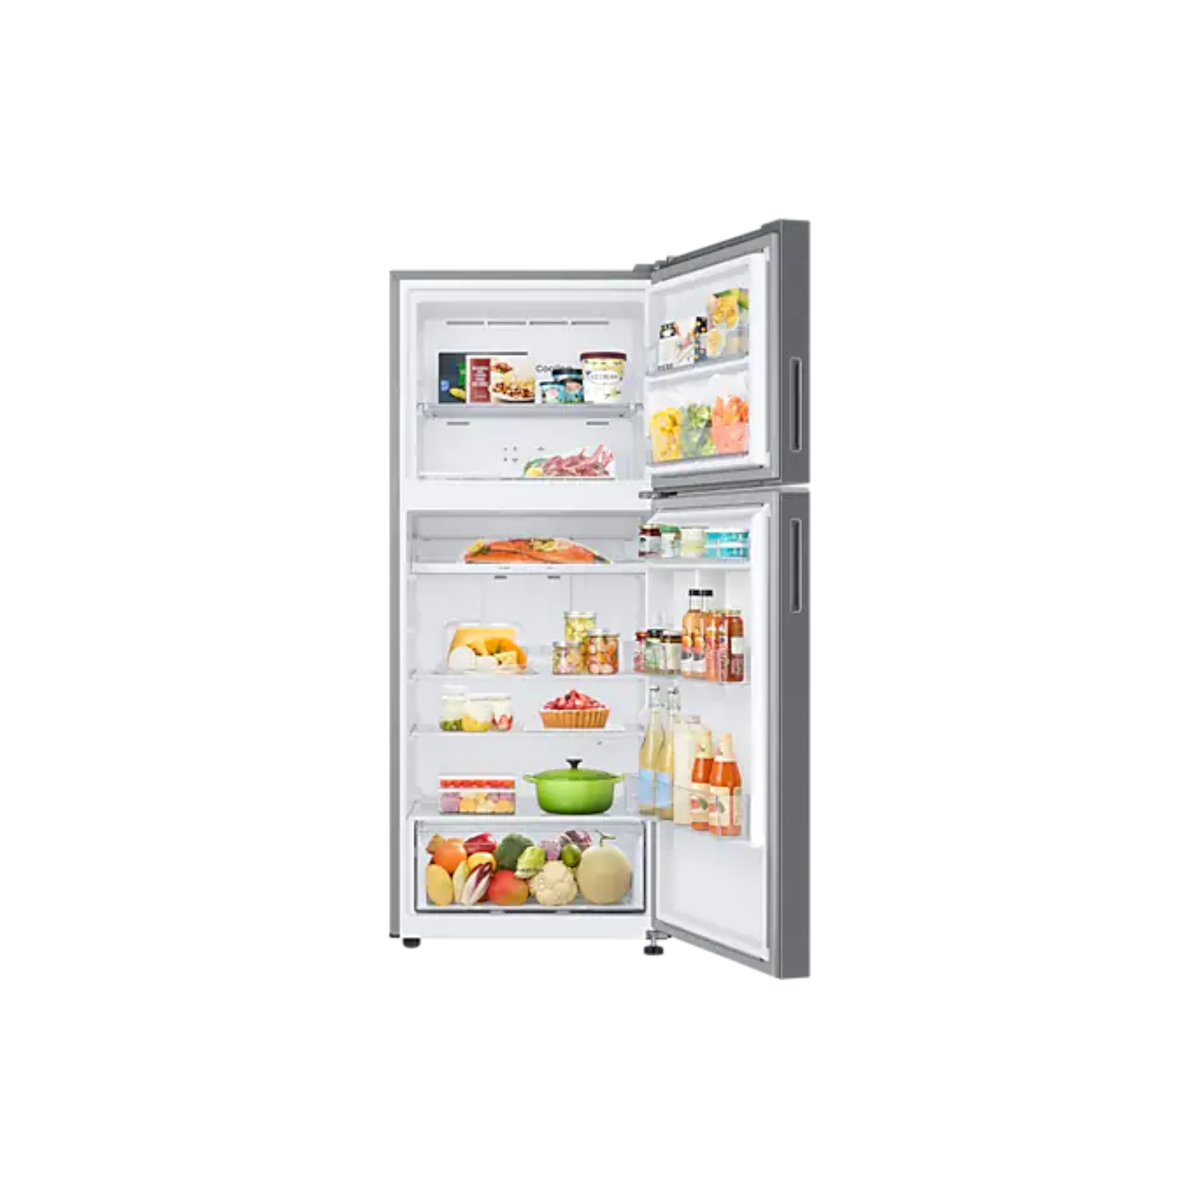 Samsung Double Door Refrigerator with Optimal Fresh+, 388 L, Refined Inox, RT38CG6404S9AE